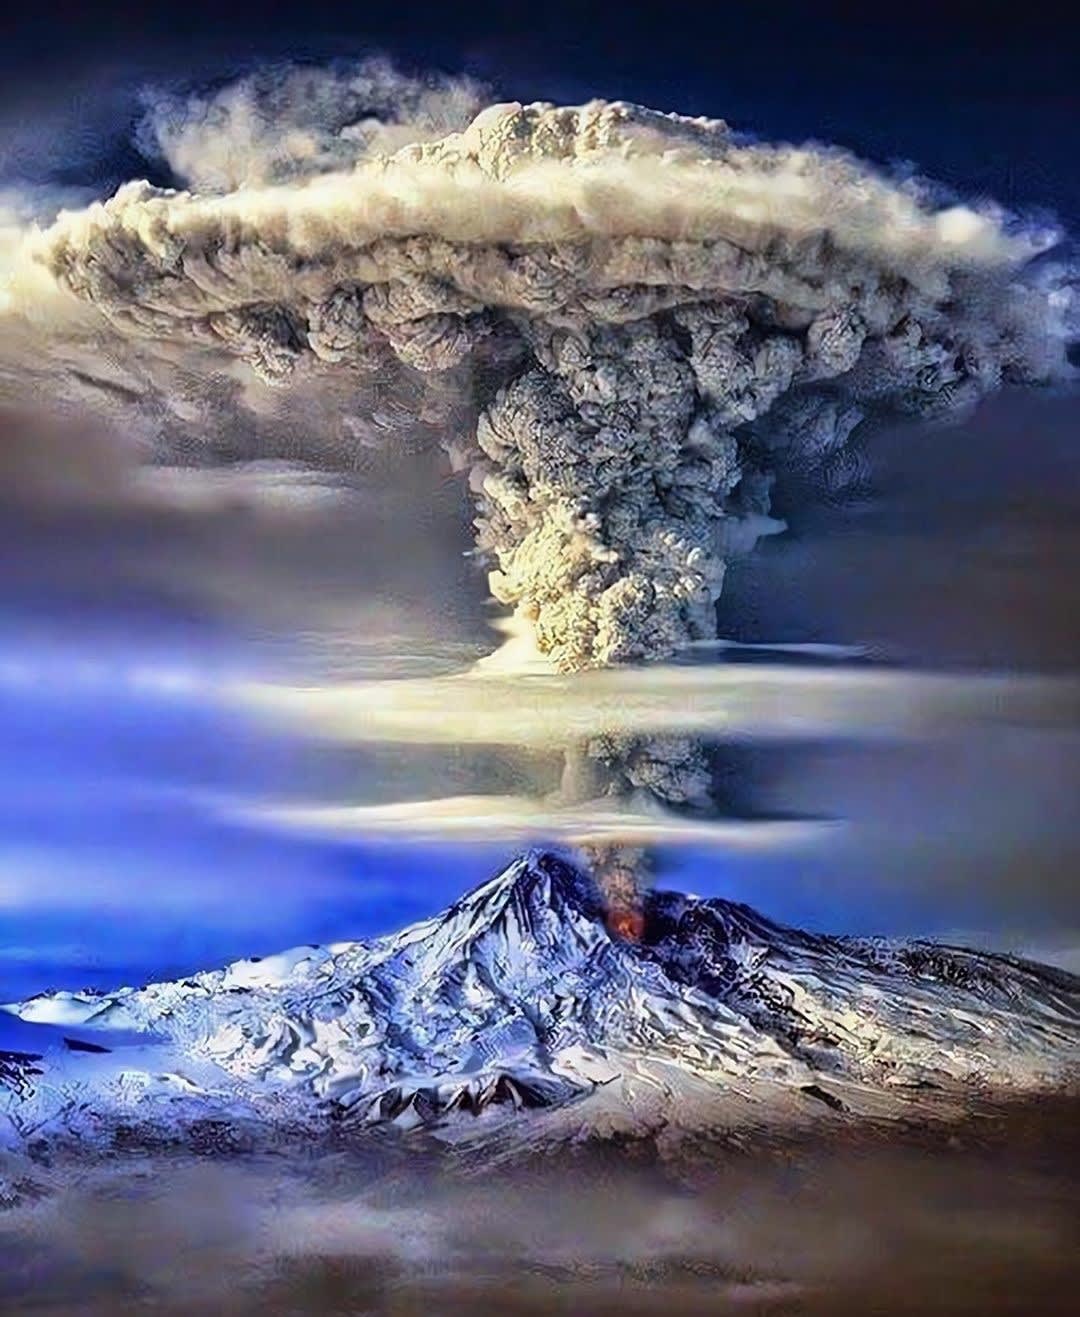 Chile's Puyehue Volcano erupting